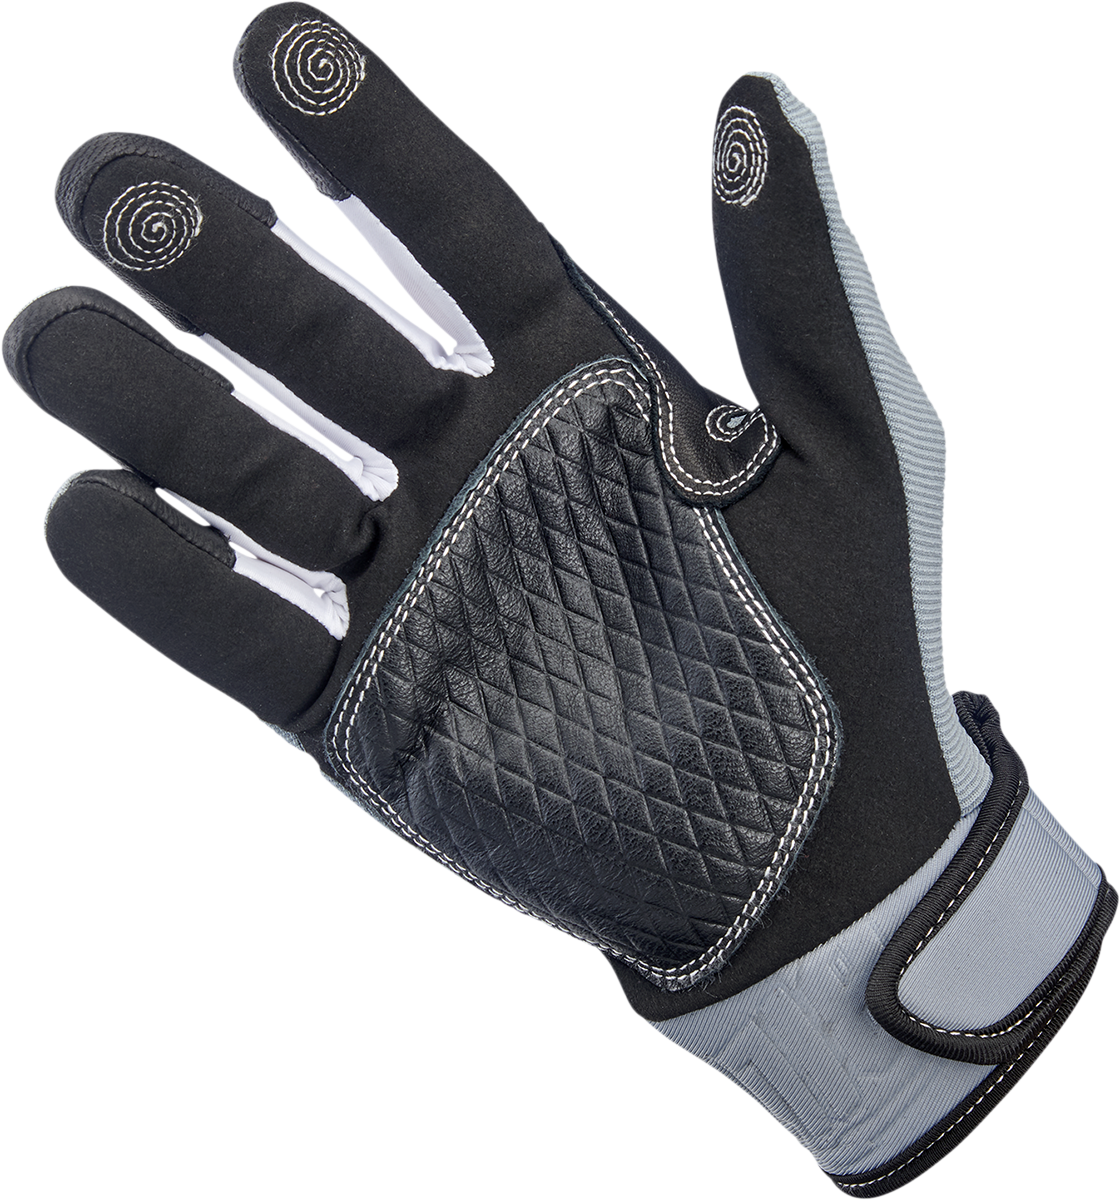 BILTWELL Baja Gloves - Gray - Medium 1508-1101-303